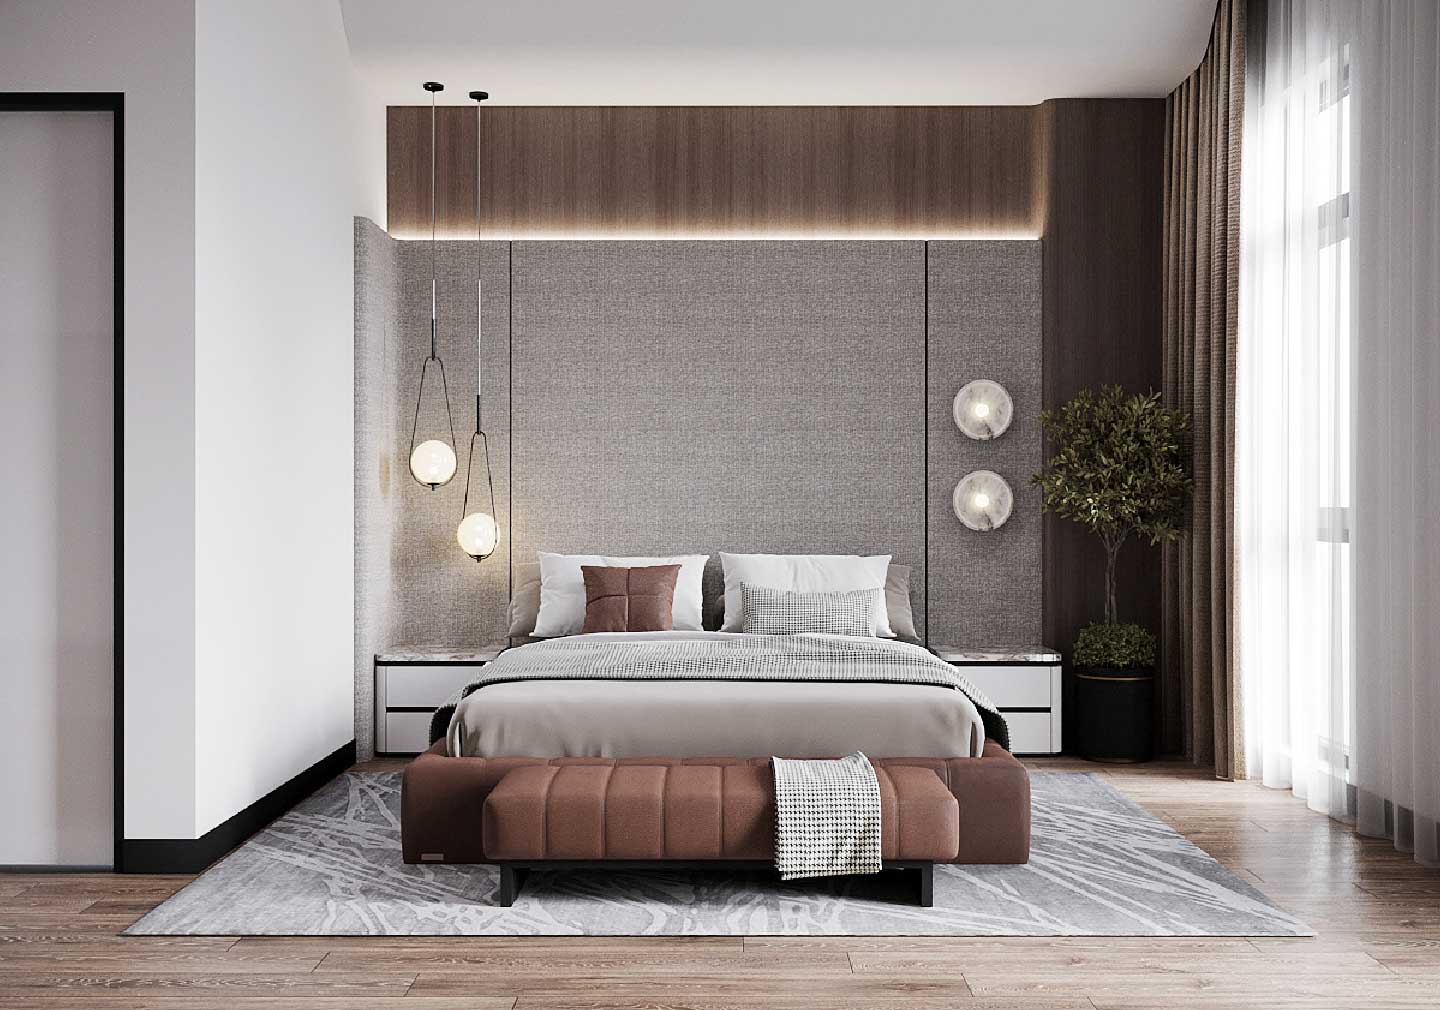 Modern Contemporary master bedroom interior designs